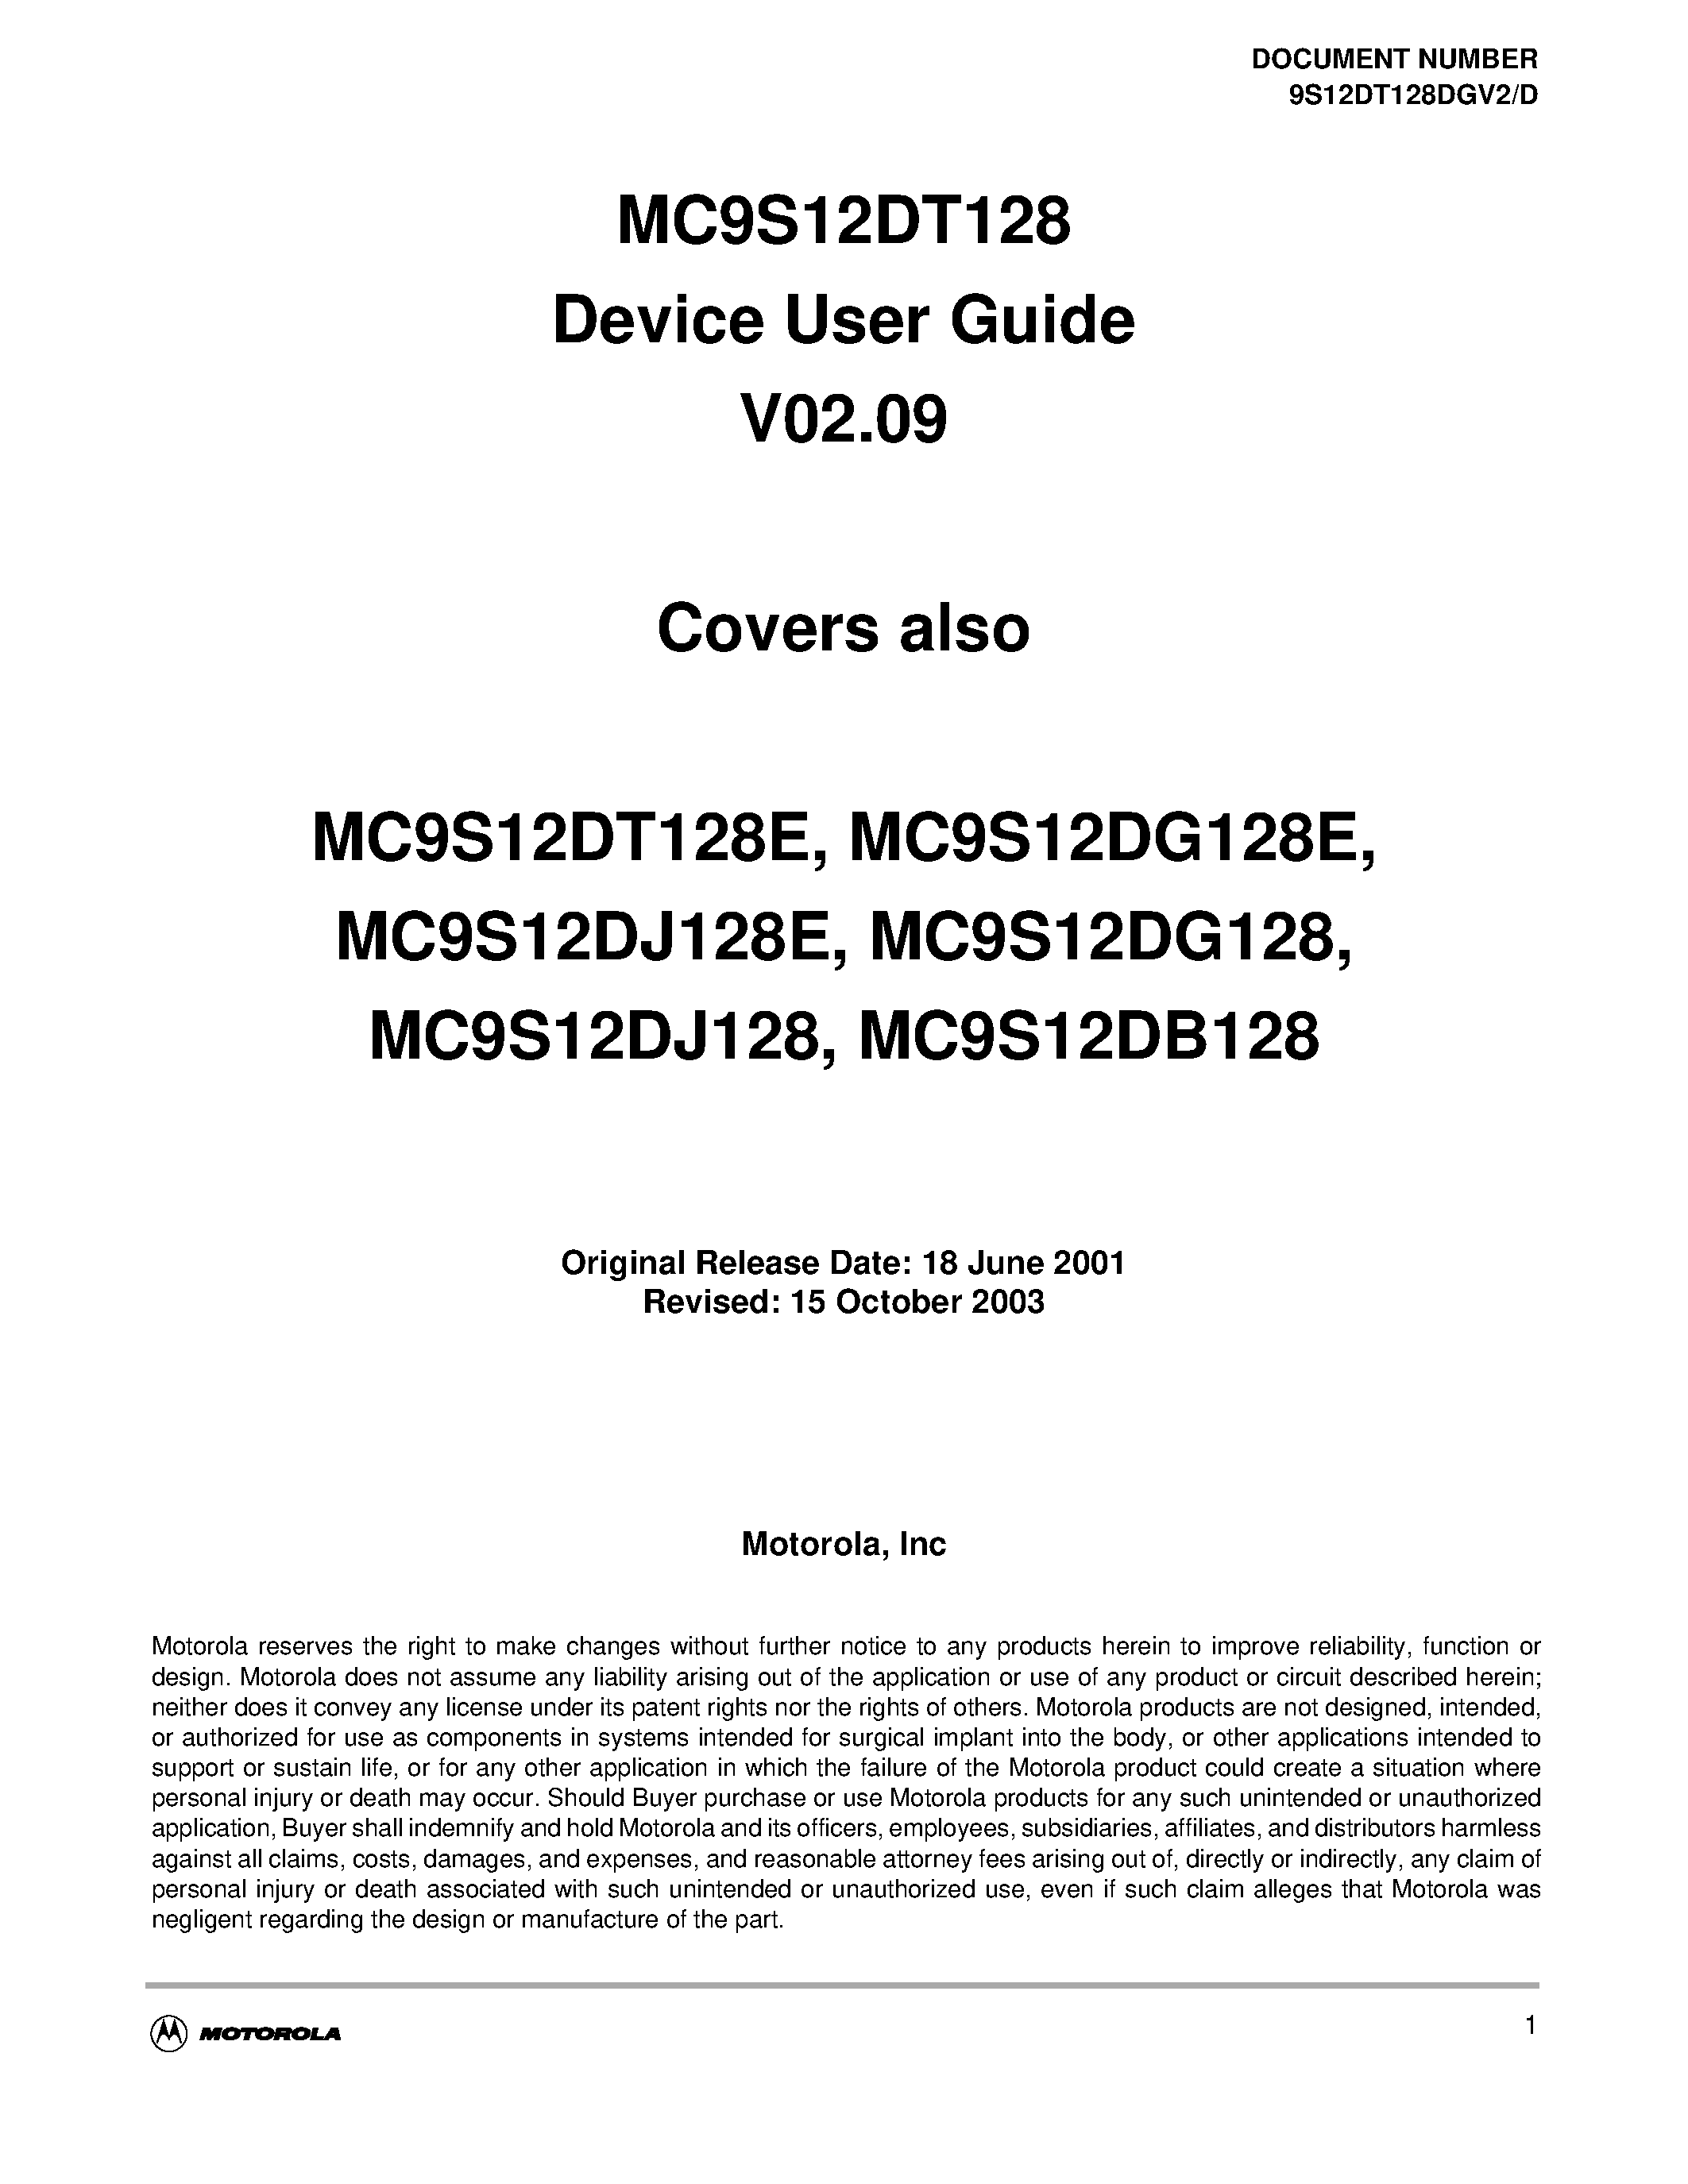 Даташит S12DTB128PIMV2 - MC9S12DT128 Device User Guide V02.09 страница 1